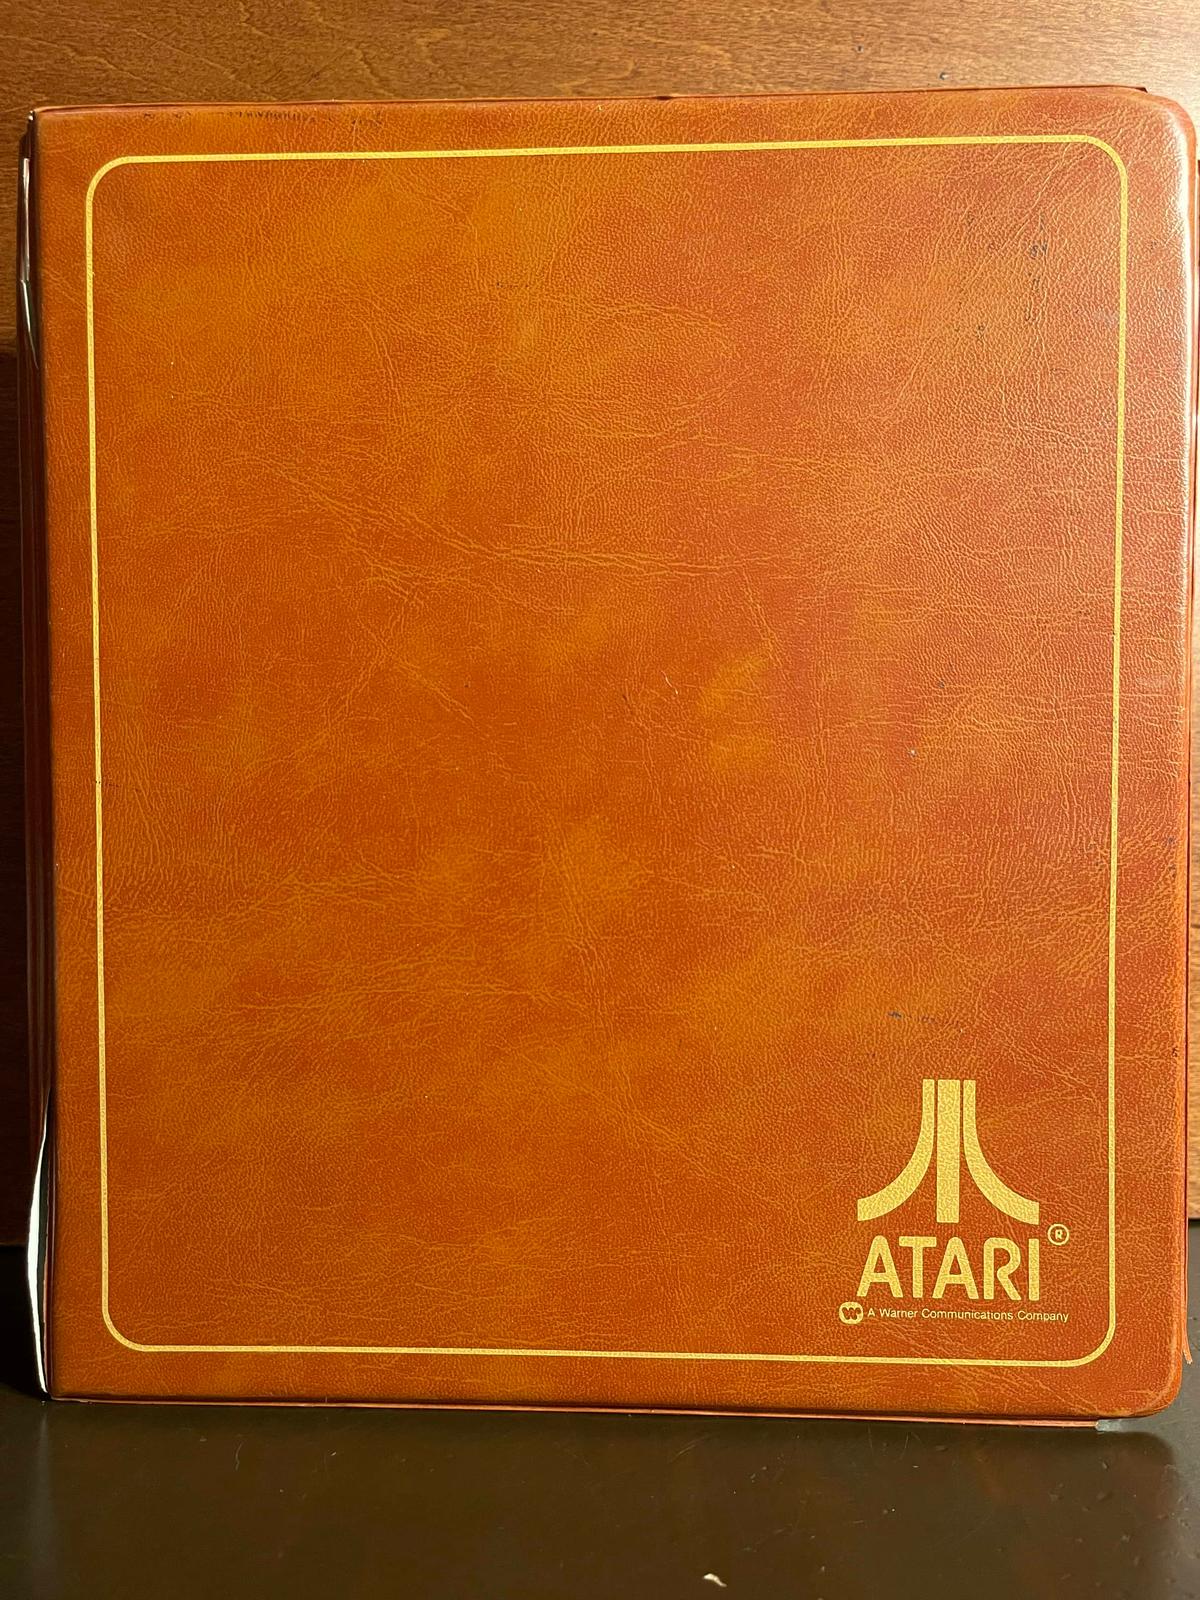 4 Atari Game Cartridges with Atari Game Case Holder Space War Basketball Breakout Video Olympics